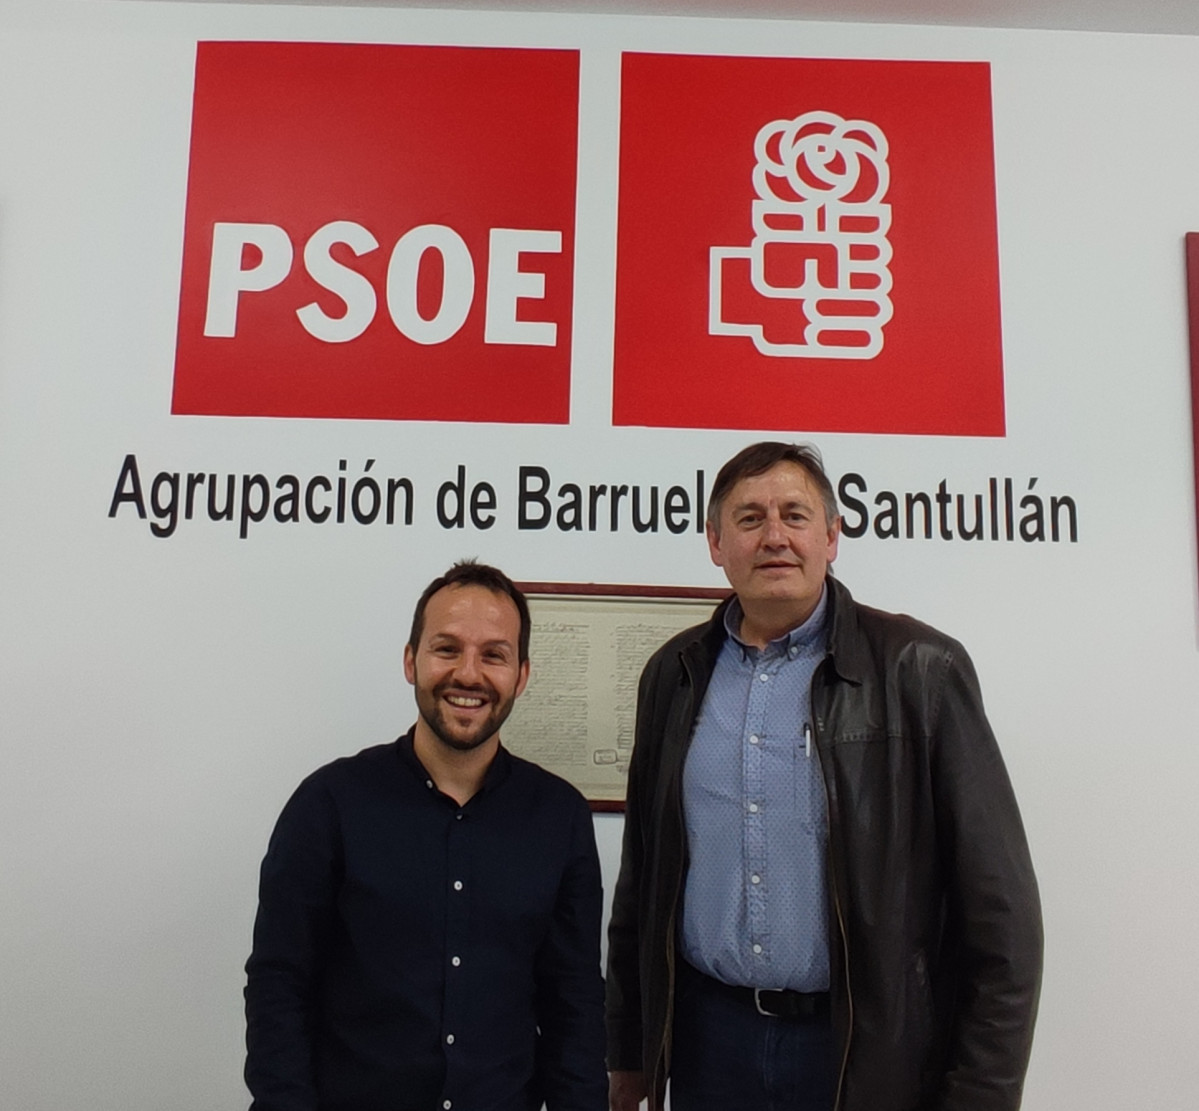 Candidatos PSOEbarruelo y brau00f1osera